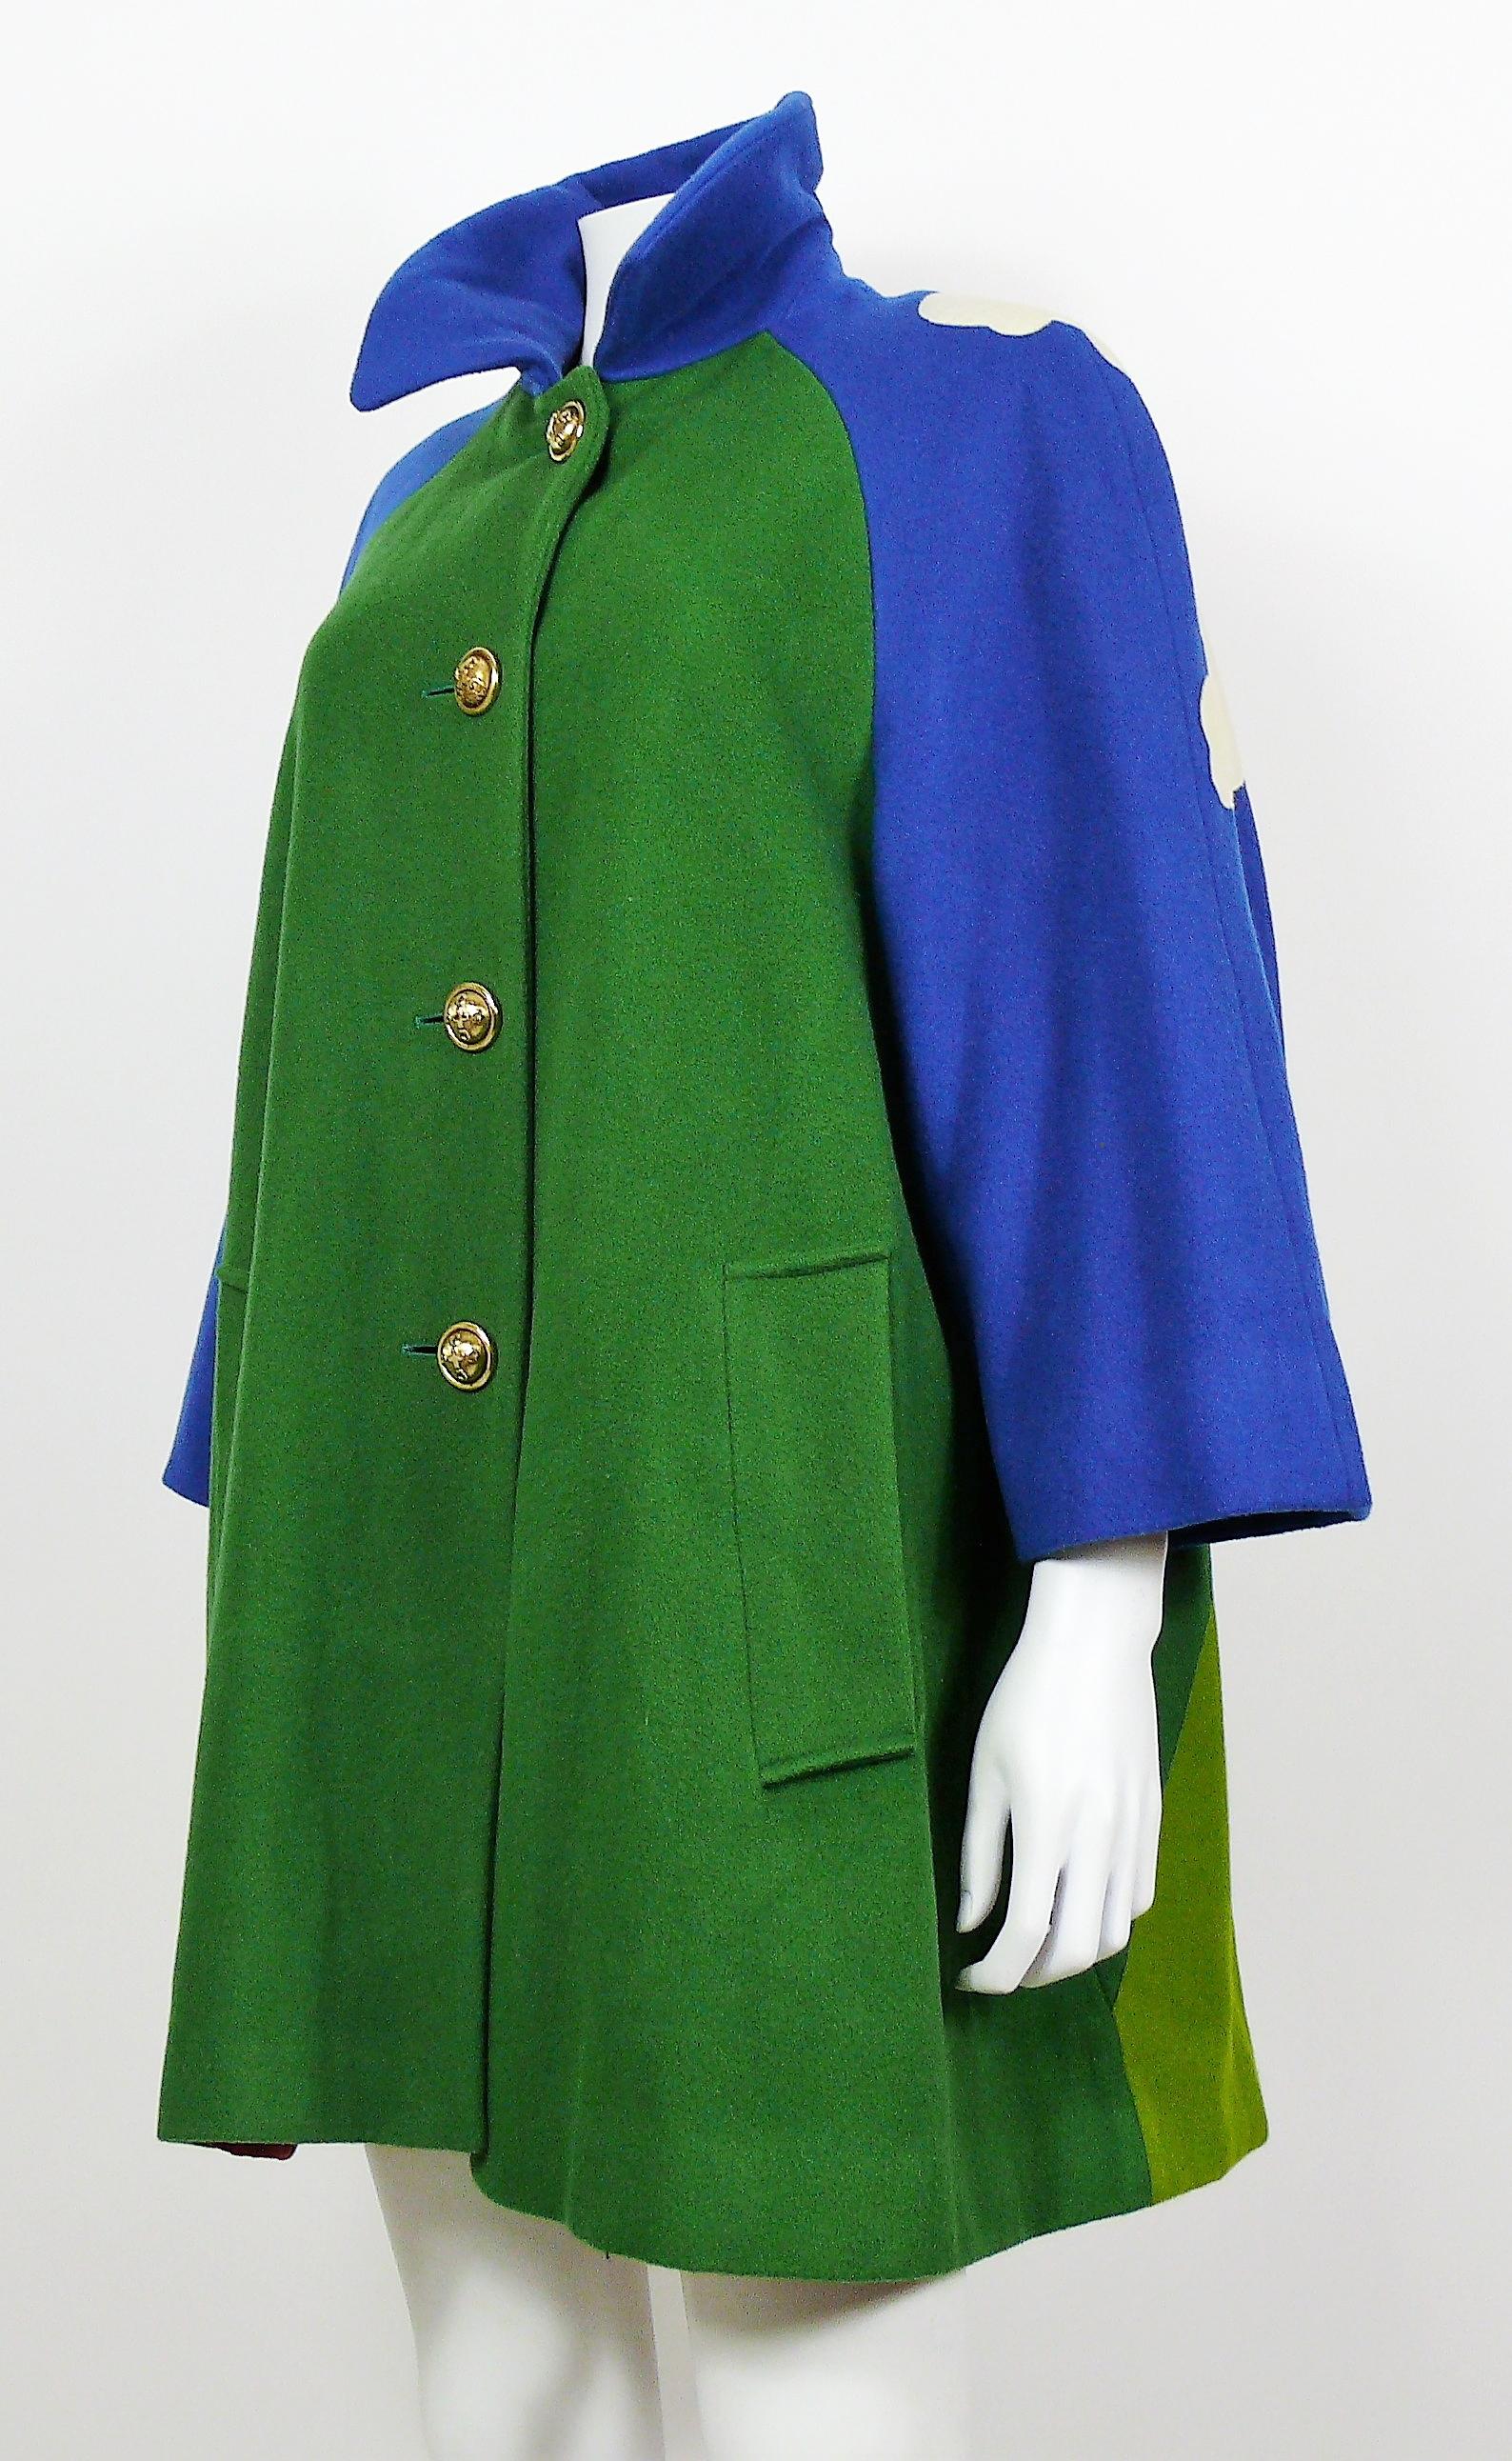 novlty coat